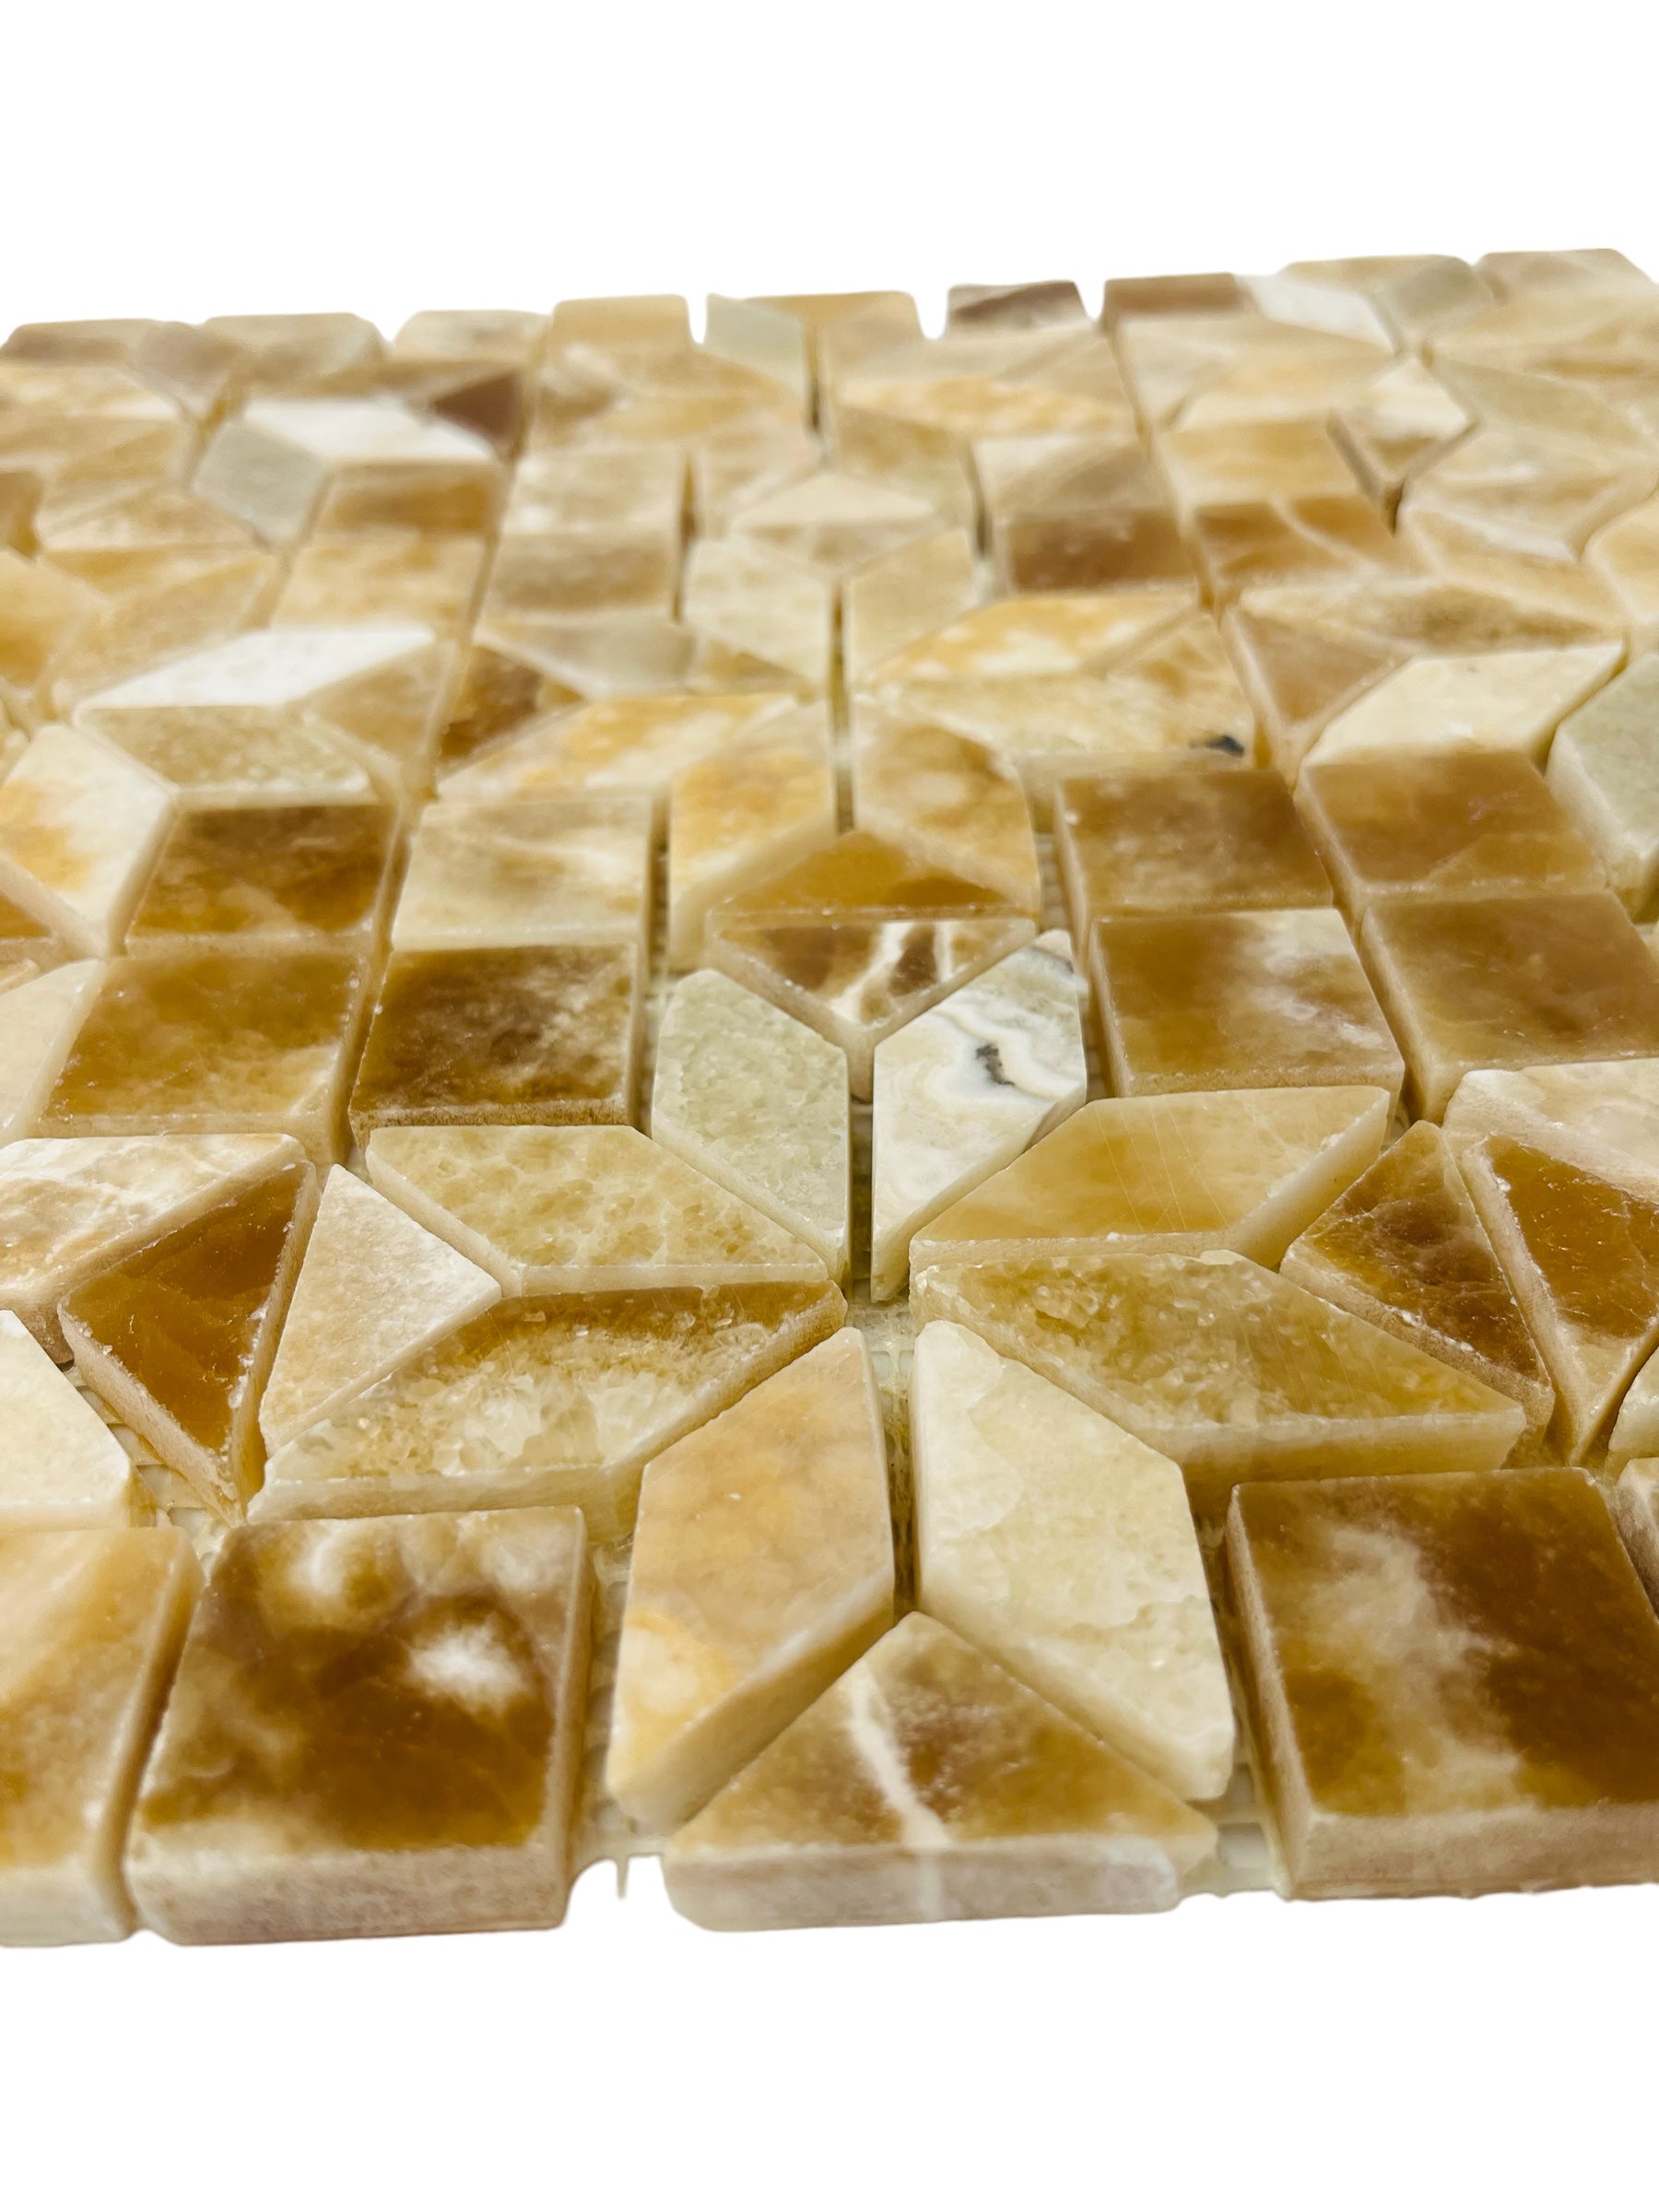 Geometric Star Pattern Marble Caramel Gold Honey Onyx Polished Mosaic Floor and Wall Tile for Kitchen Backsplash, Bathroom Wall, Fireplace Surround (5 Sheet